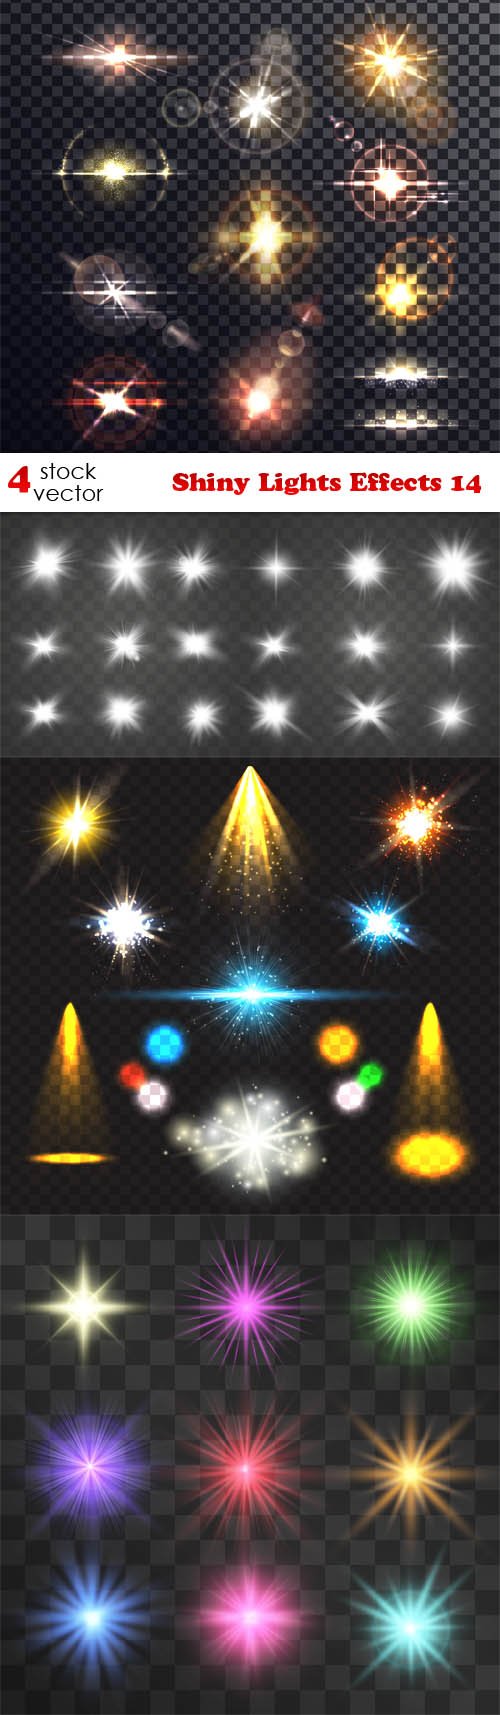 Vectors - Shiny Lights Effects 14